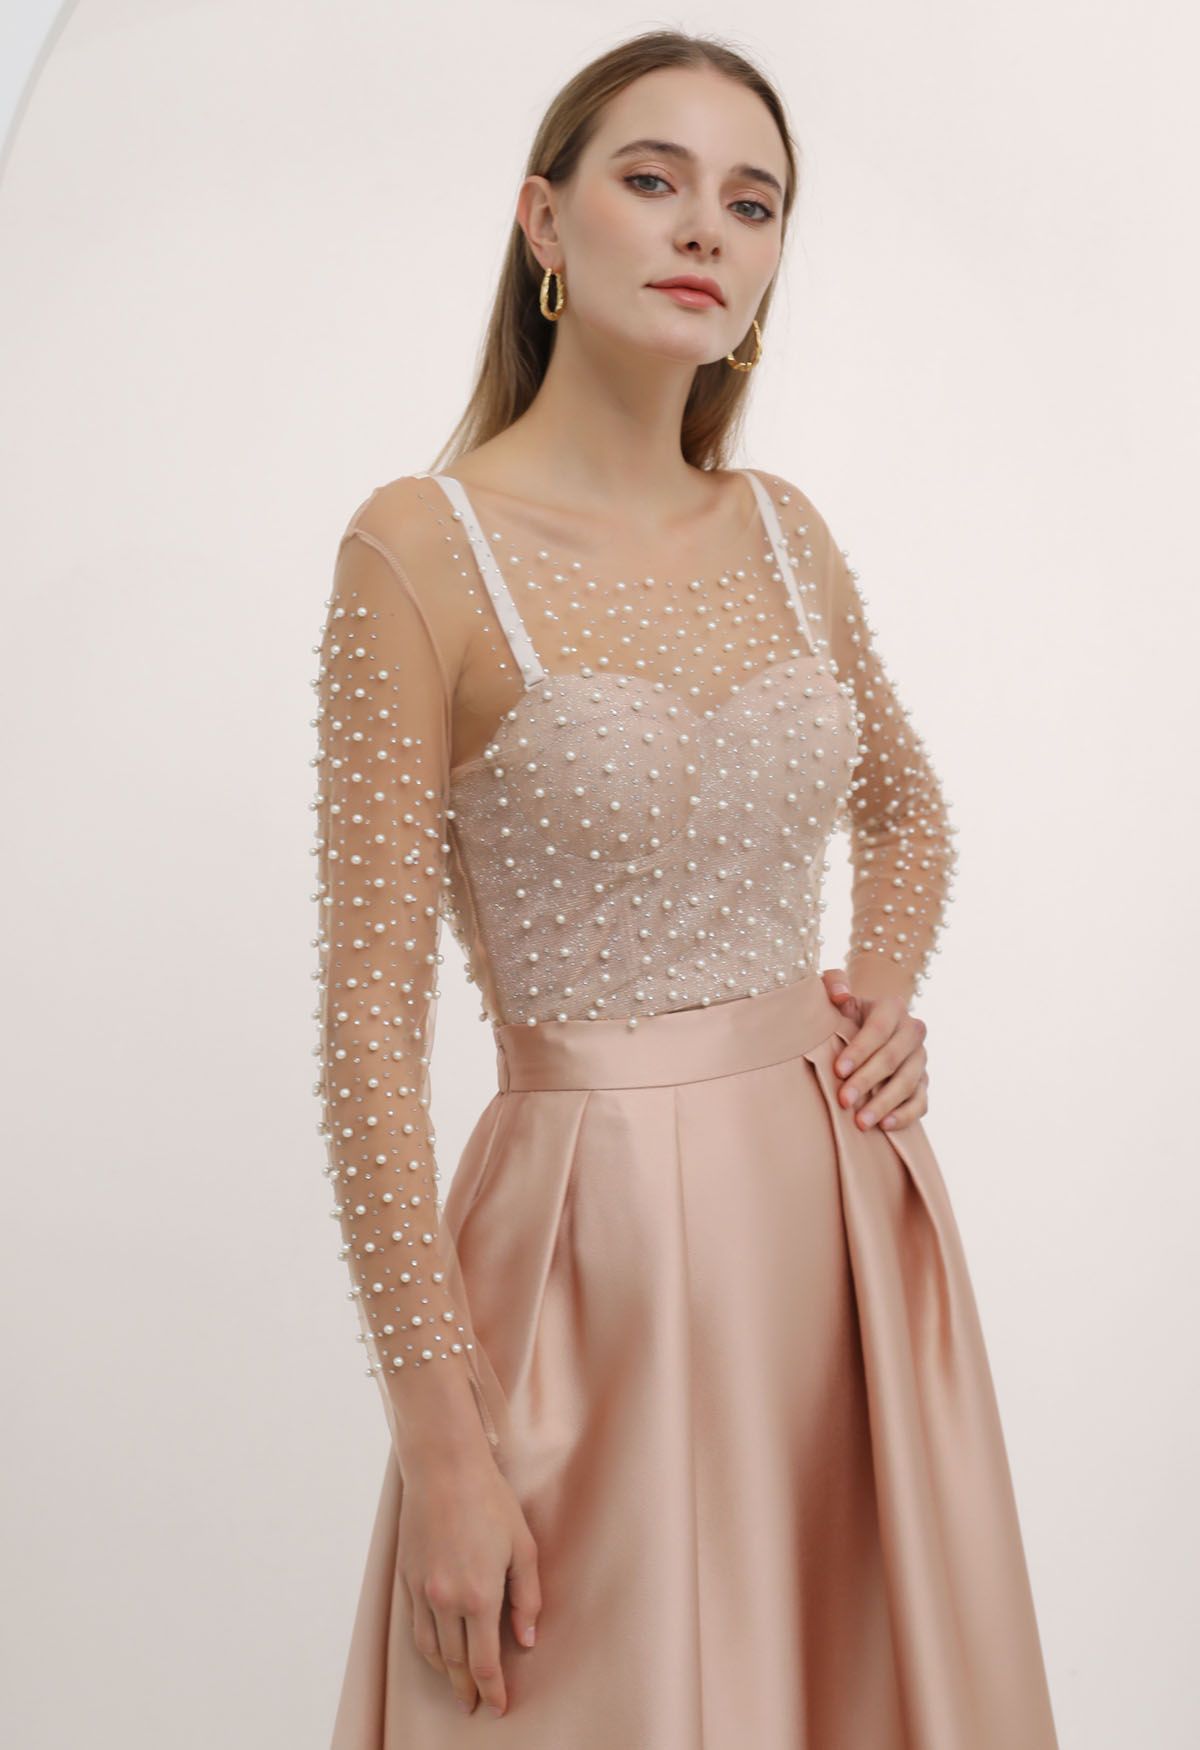 Pearl blouse + sheer camisole dress setup – Belchic